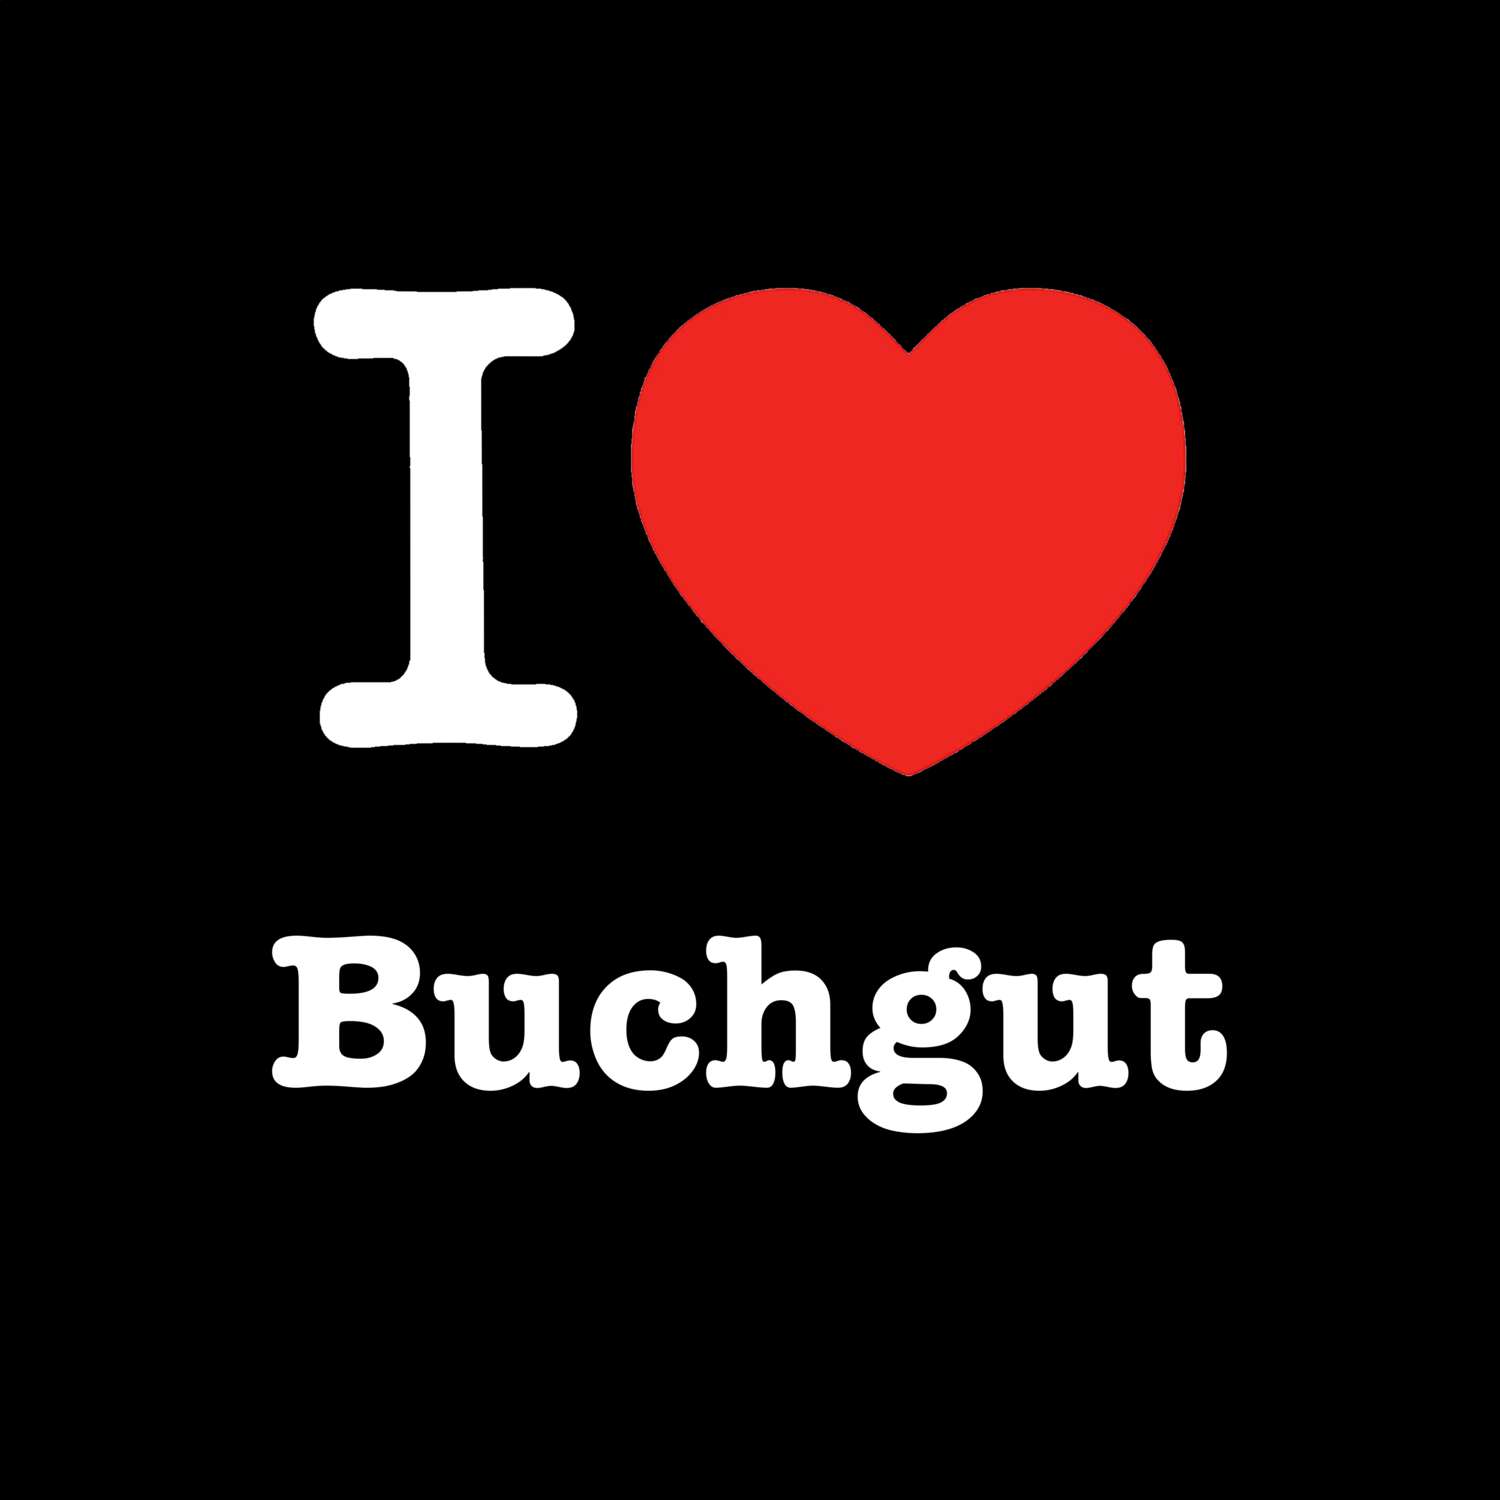 Buchgut T-Shirt »I love«